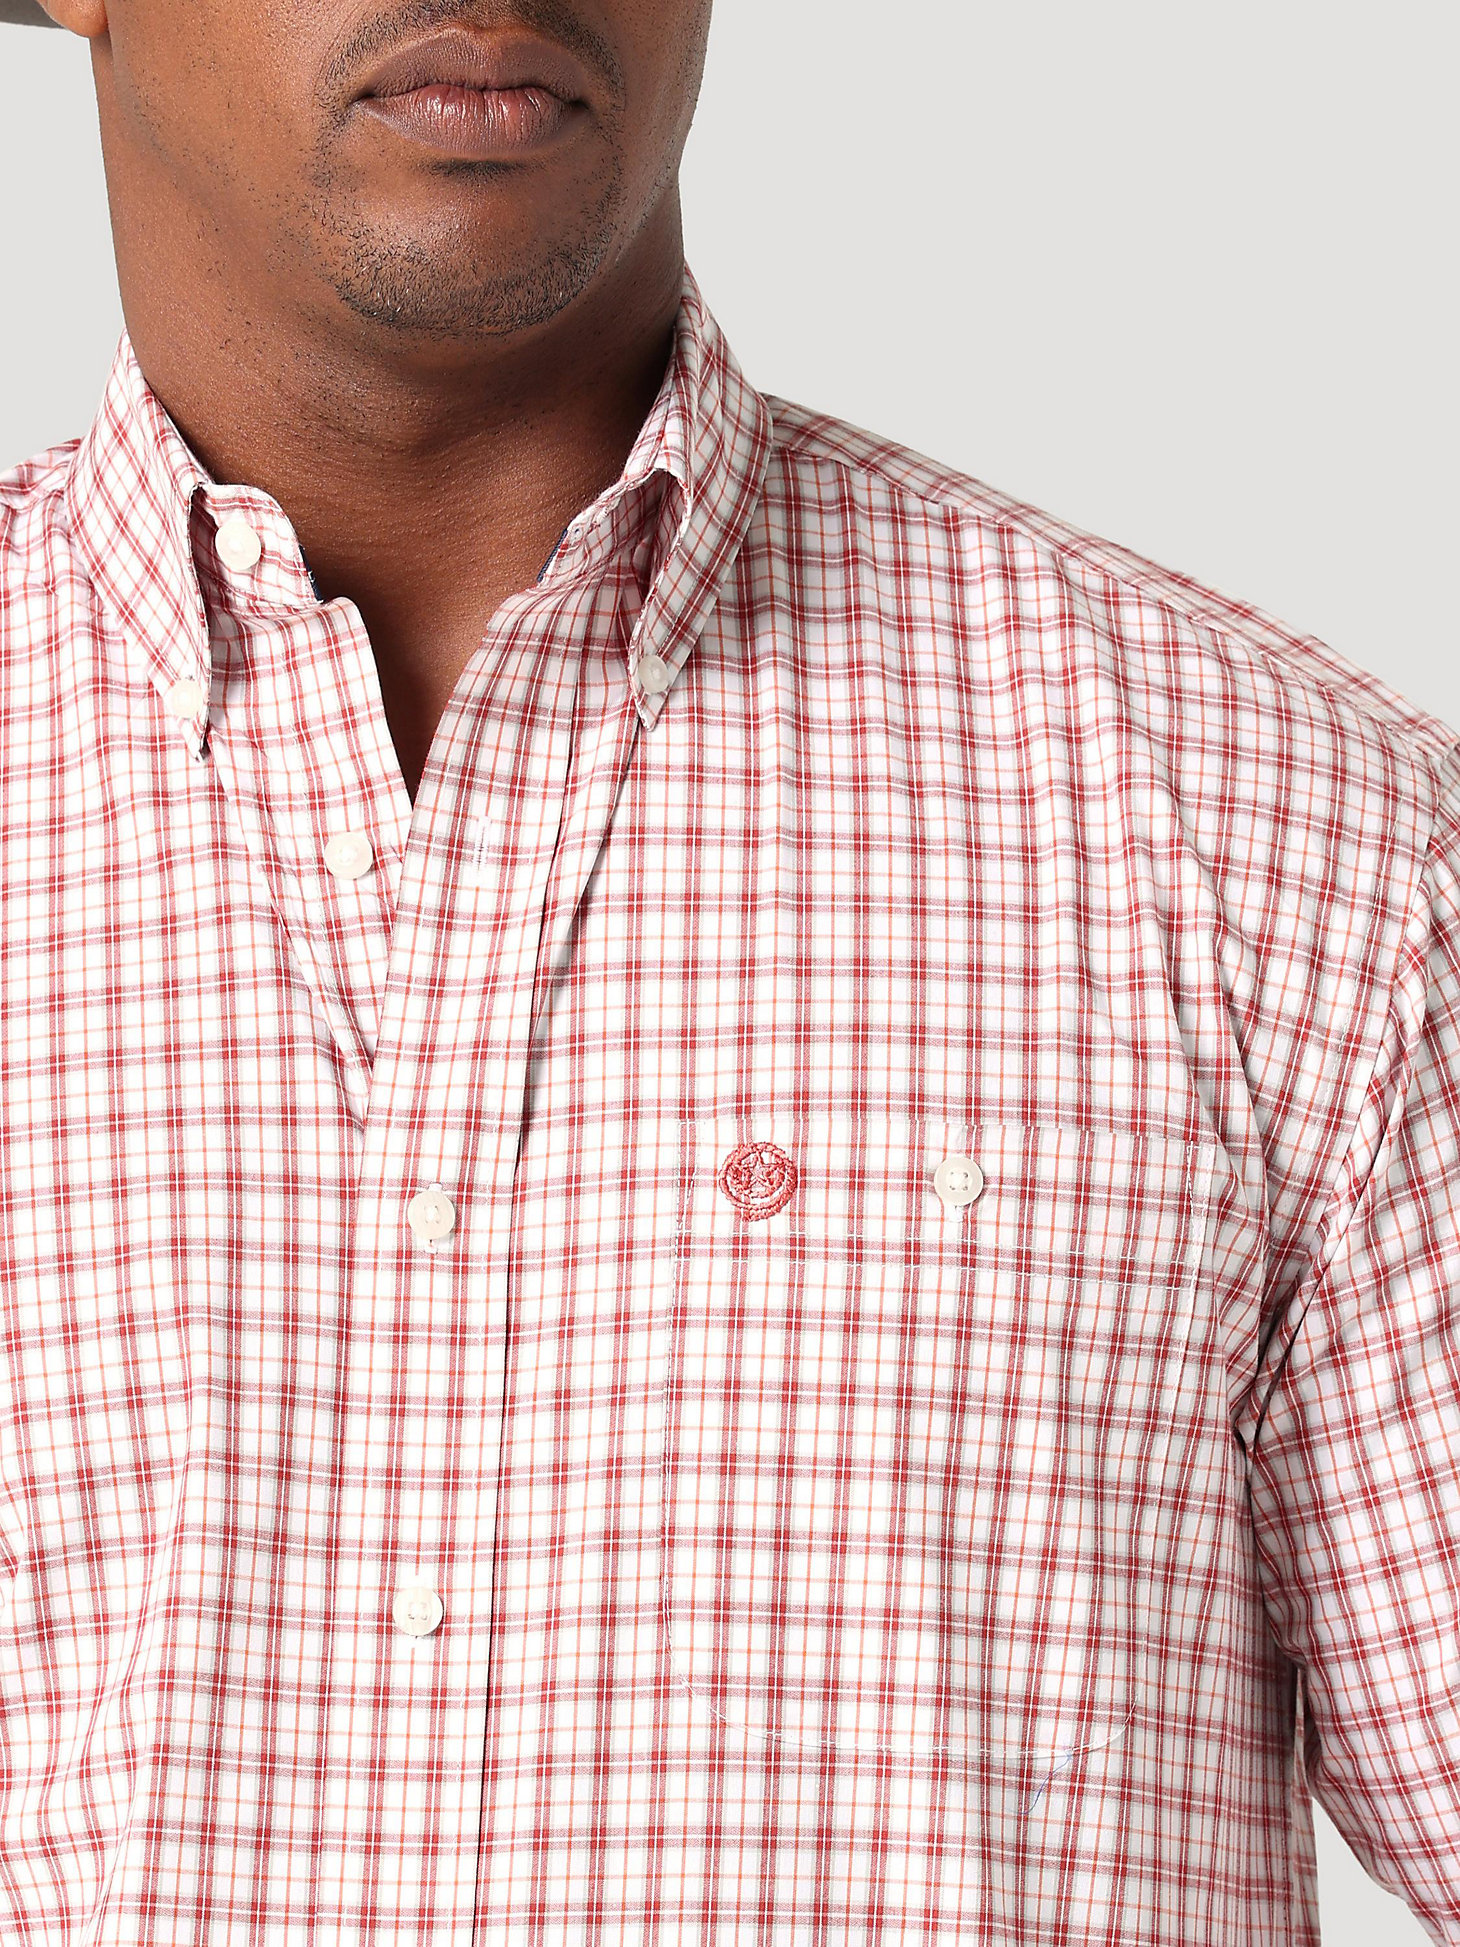 Men's George Strait Long Sleeve Button Down One Pocket Plaid Shirt in Brick Red Checks alternative view 2